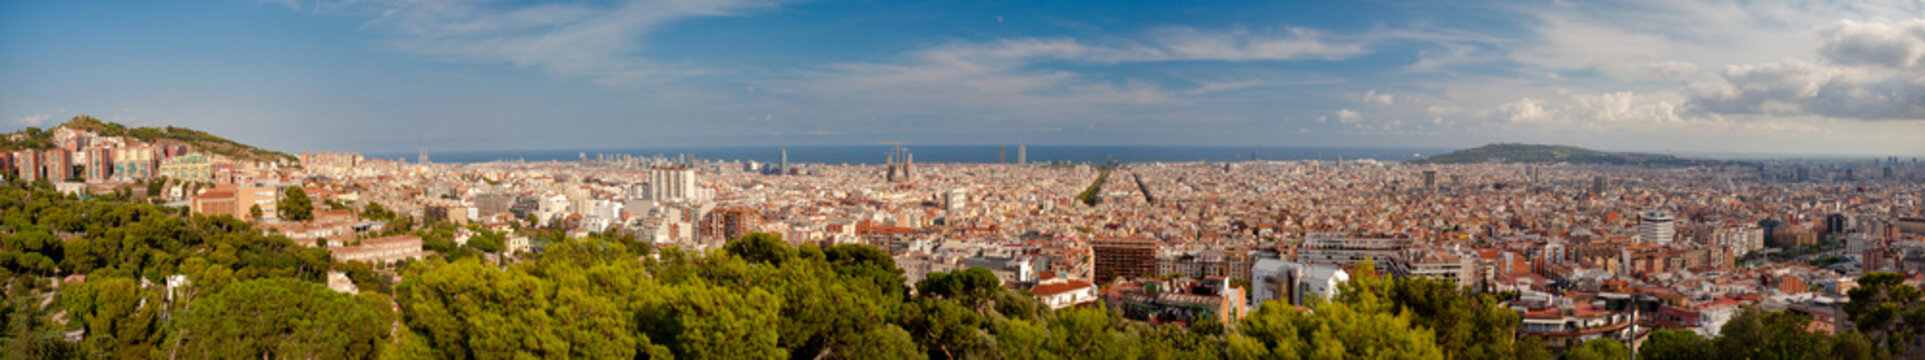 Graet panoramic view of Barcelona